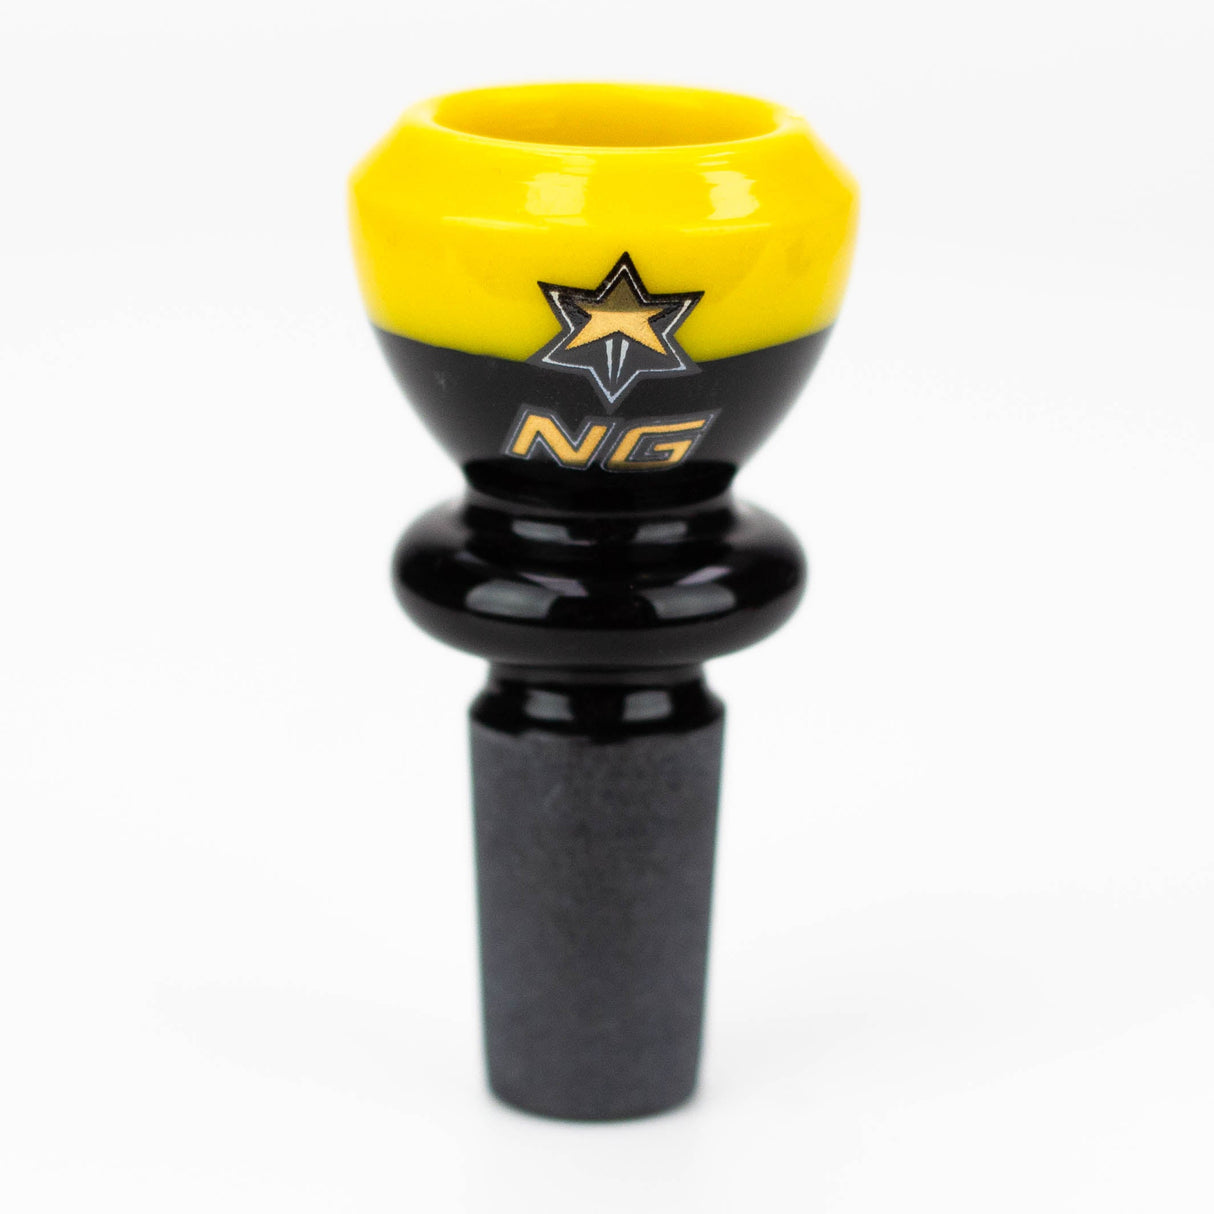 NG - Black & Colour Cup Bowl [TW002]